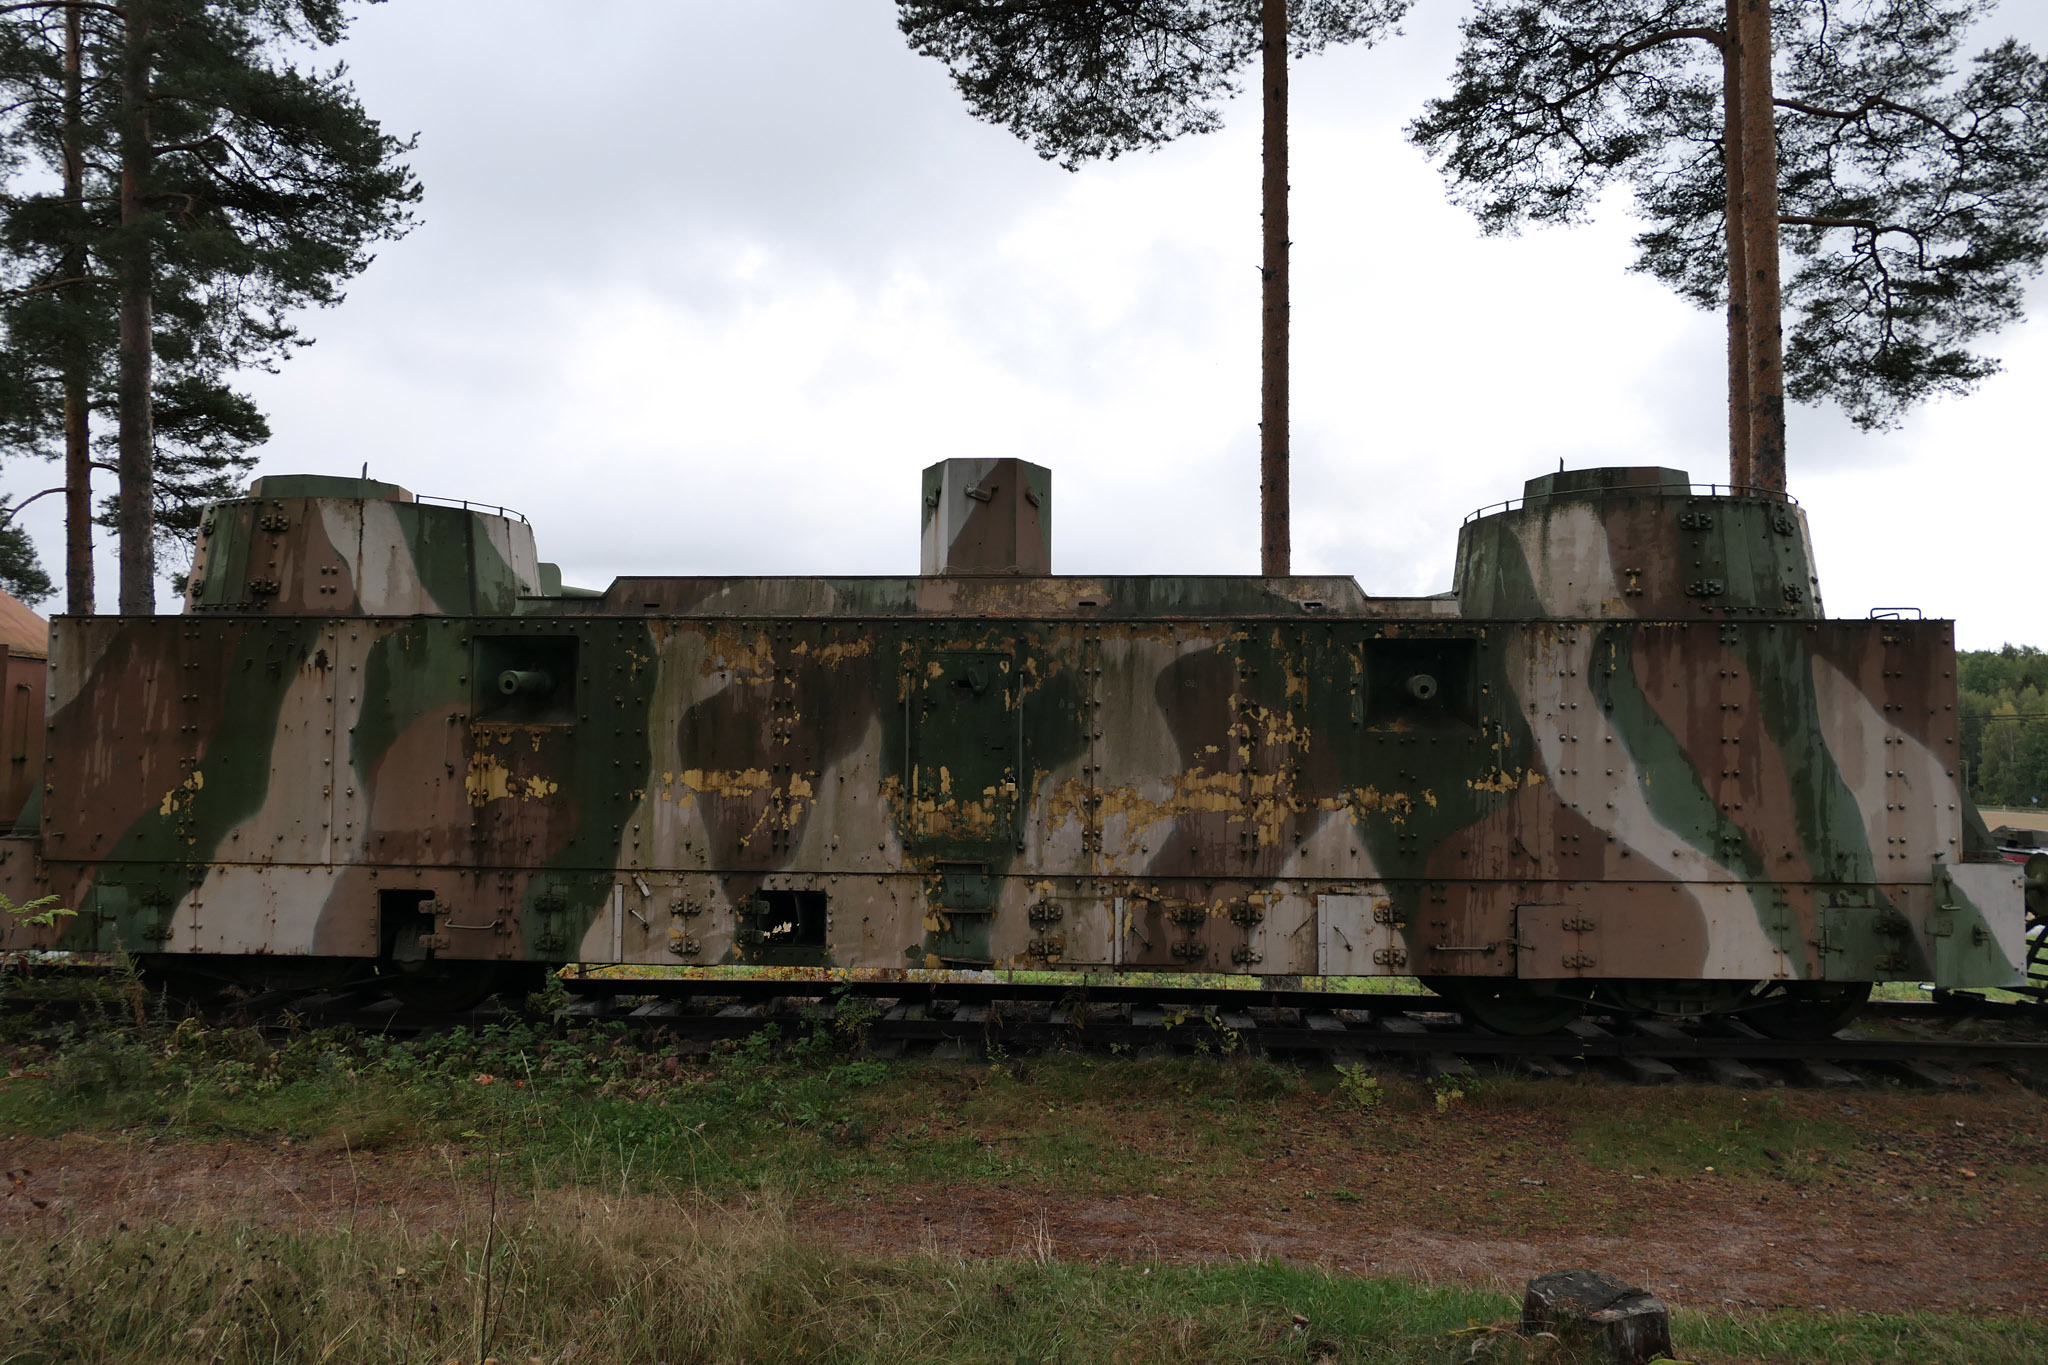 Broneunikum from Finland - Museum, Armoured train, Finland, Story, Interesting, Longpost